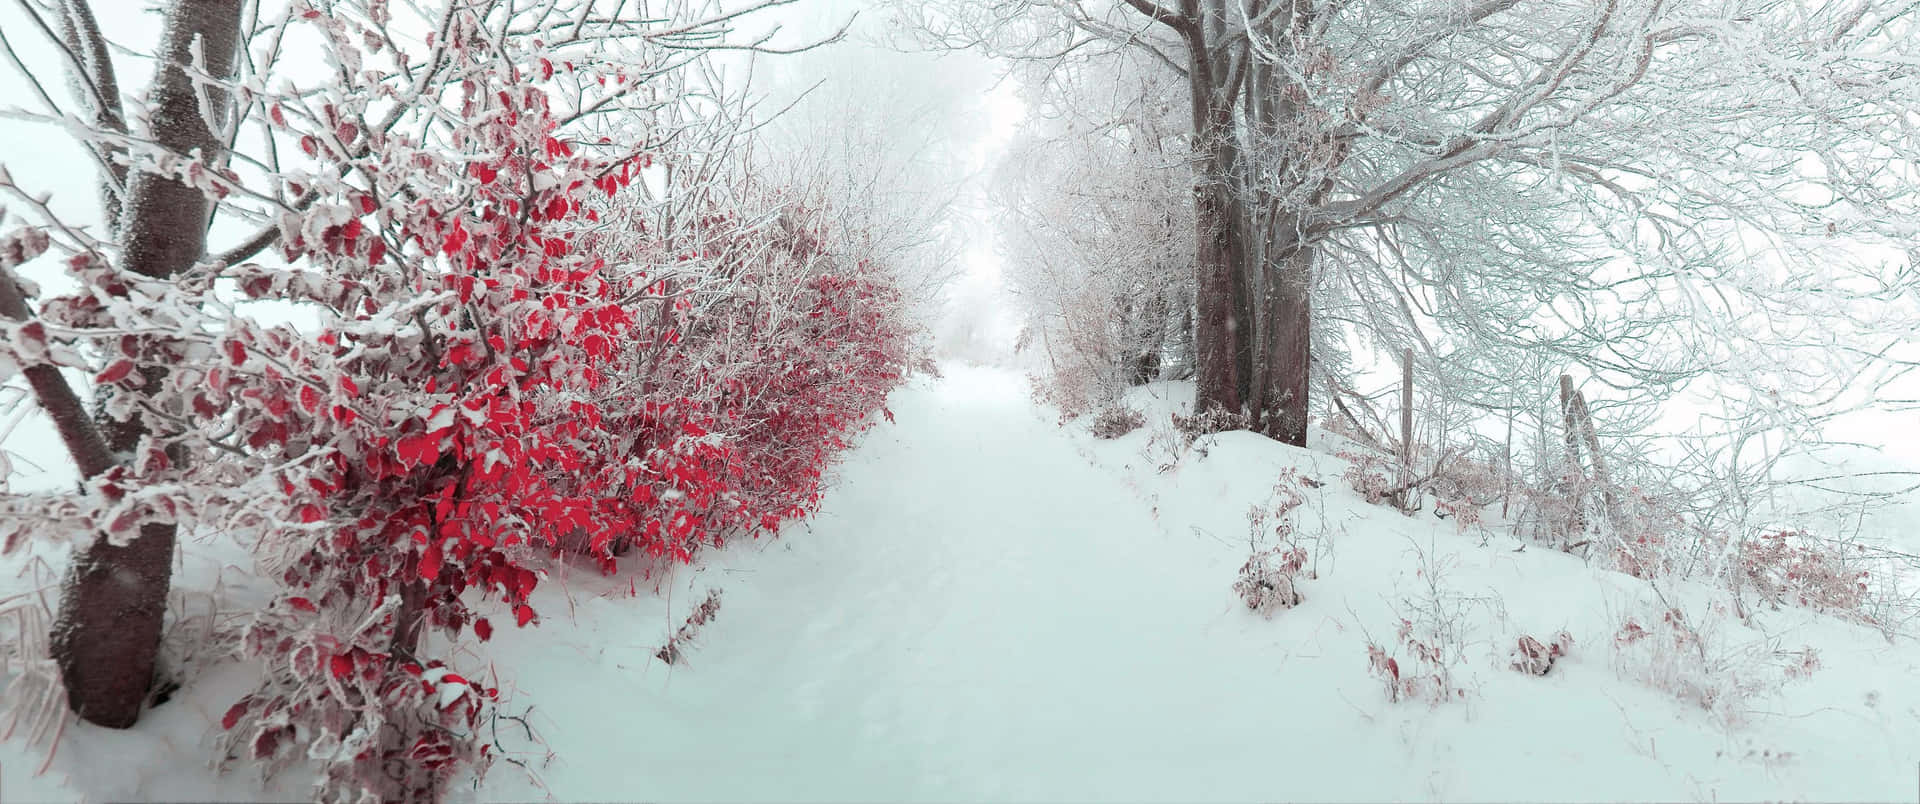 Enjoy the Winter Wonderland Wallpaper